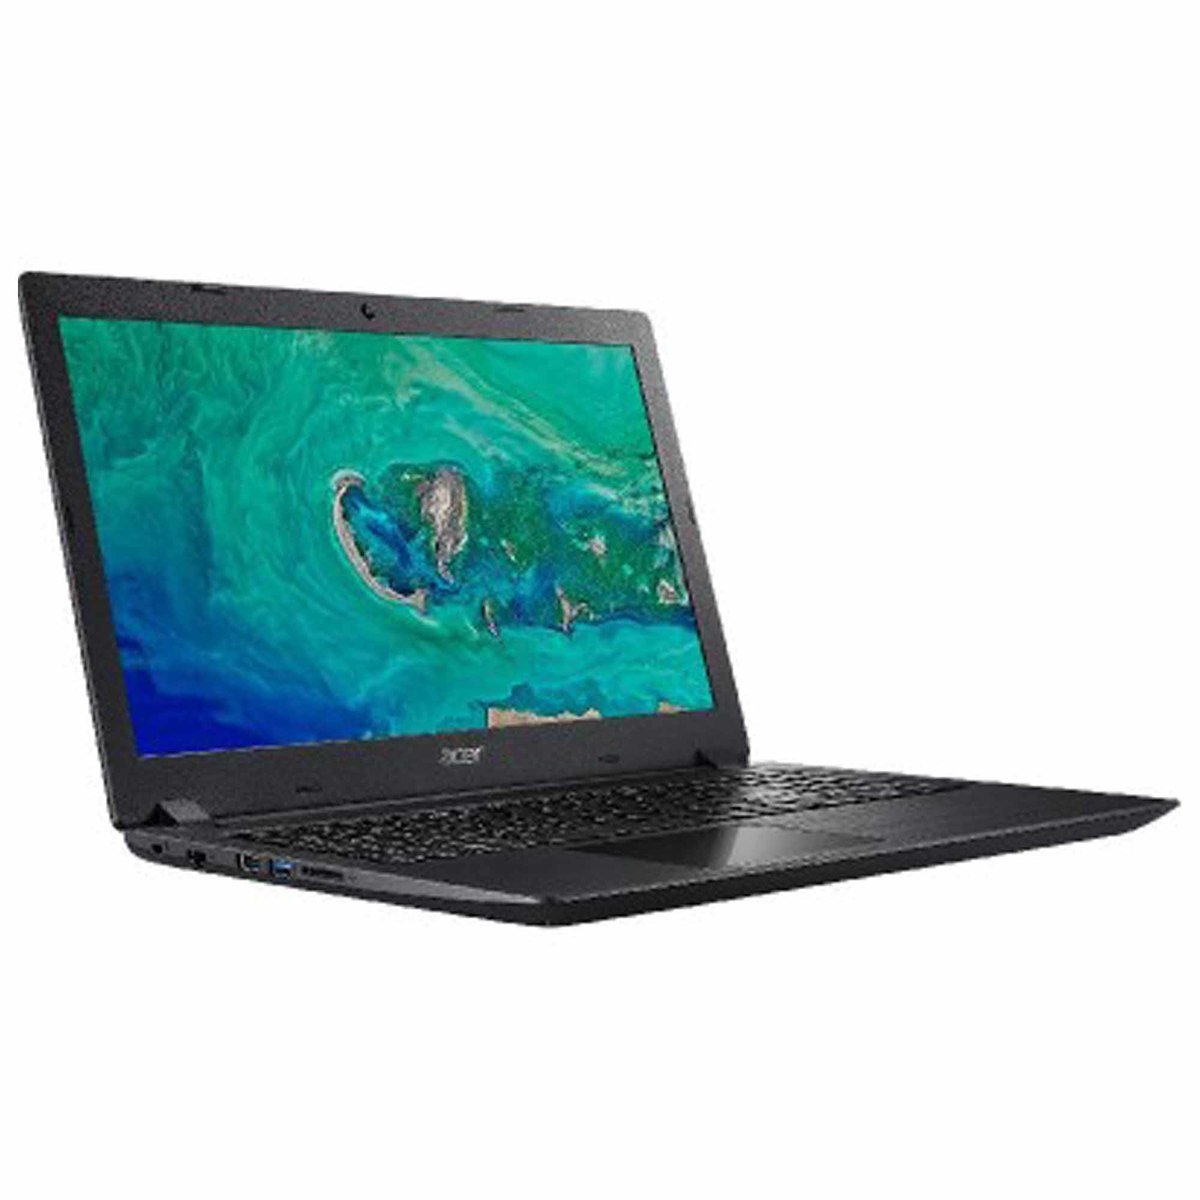 Acer Notebook Aspire 315-NXH18EM011 Core i5 Black